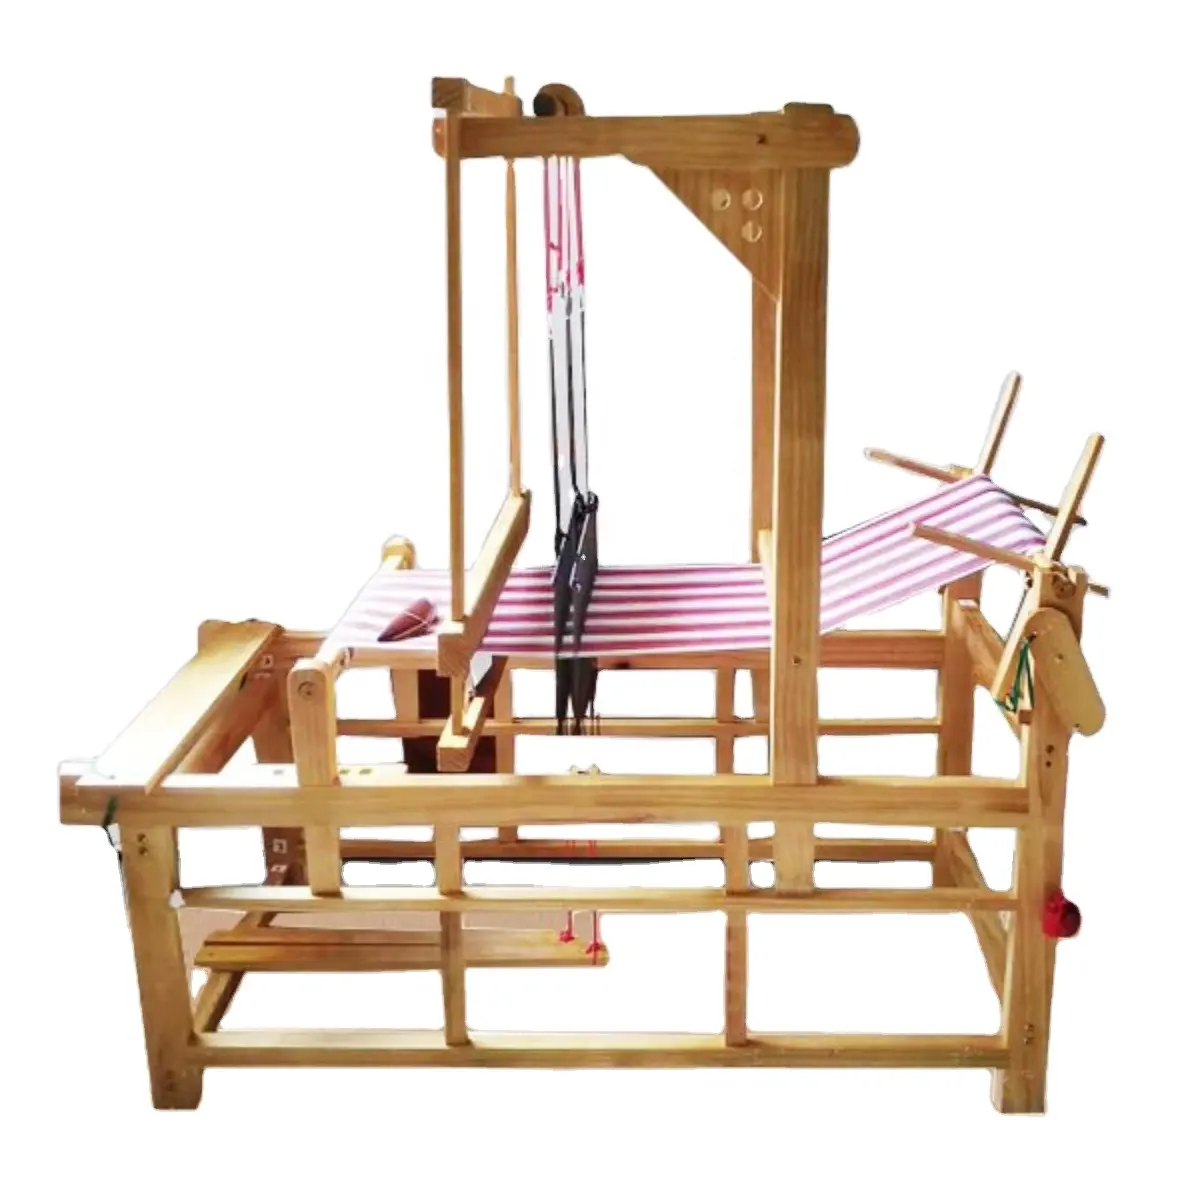 Power loom for education lab type loom